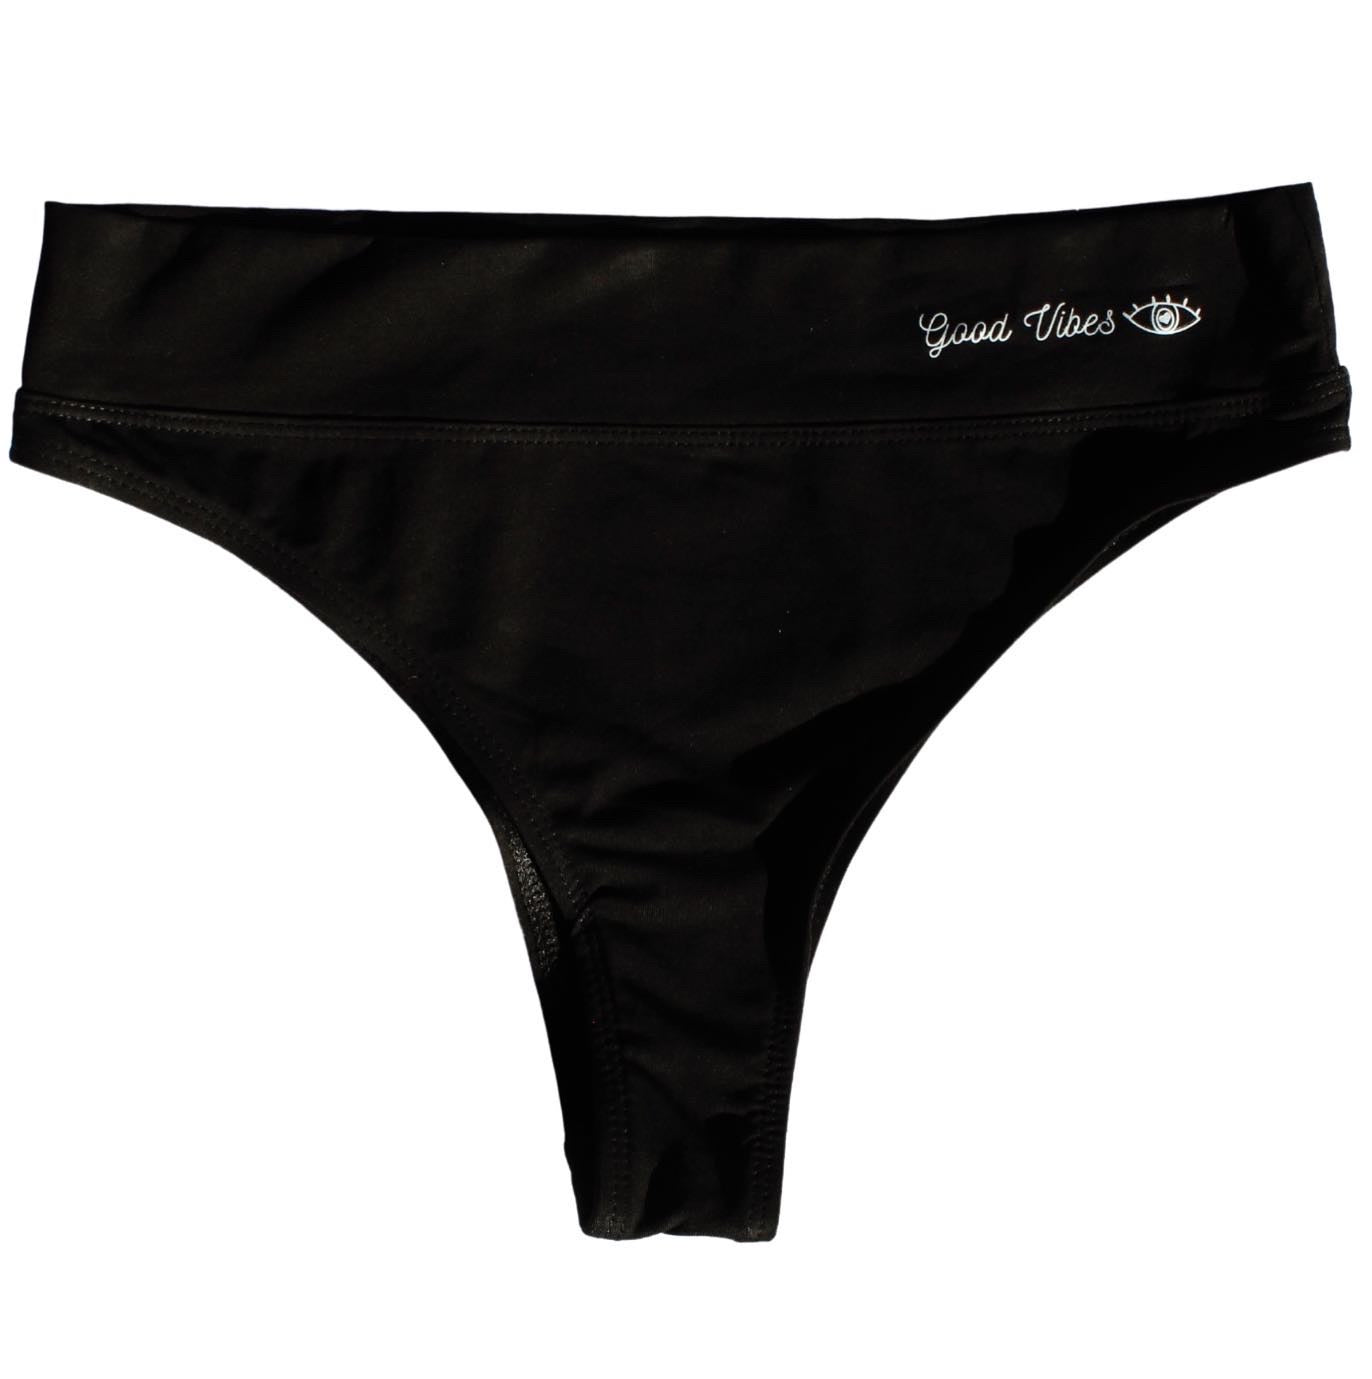 CALVIN KLEIN Women`s 3 Pack Cotton Thong Underwear Panty Perfect Gift Size M